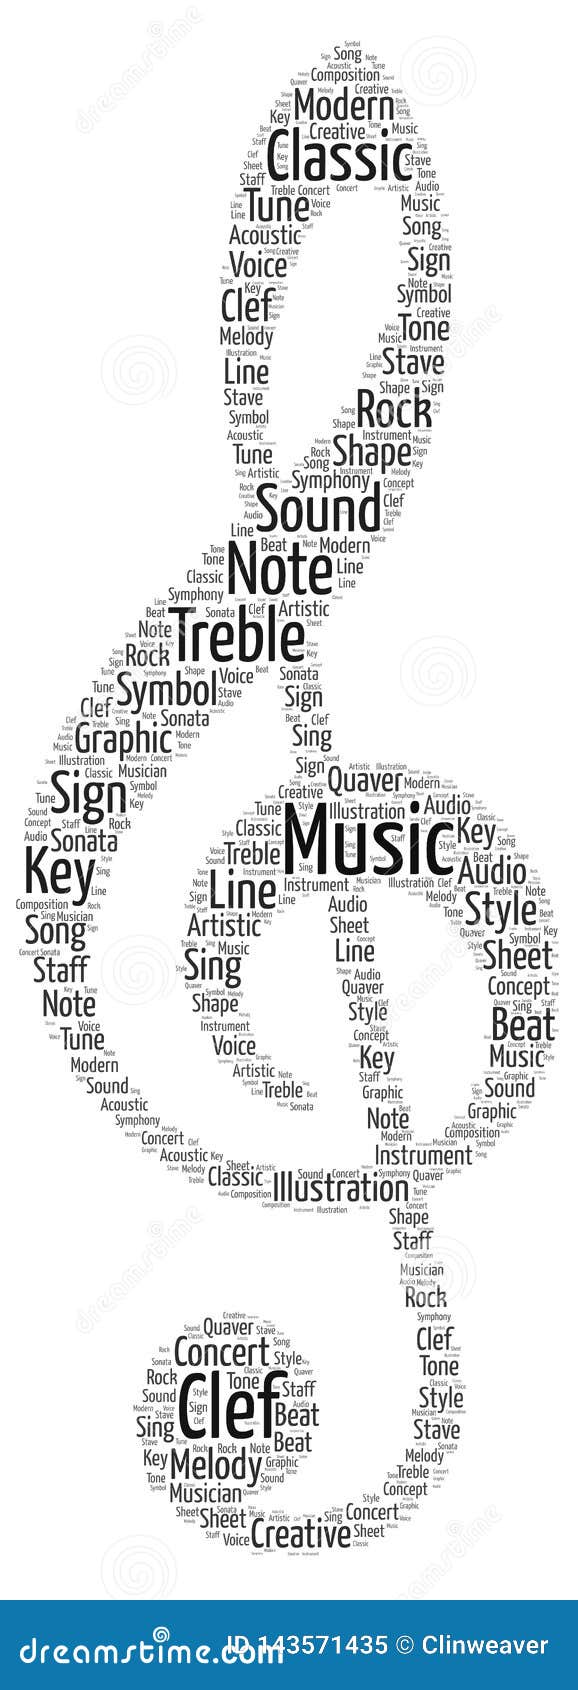 Music Symbol Word Cloud stock illustration. Illustration of music ...